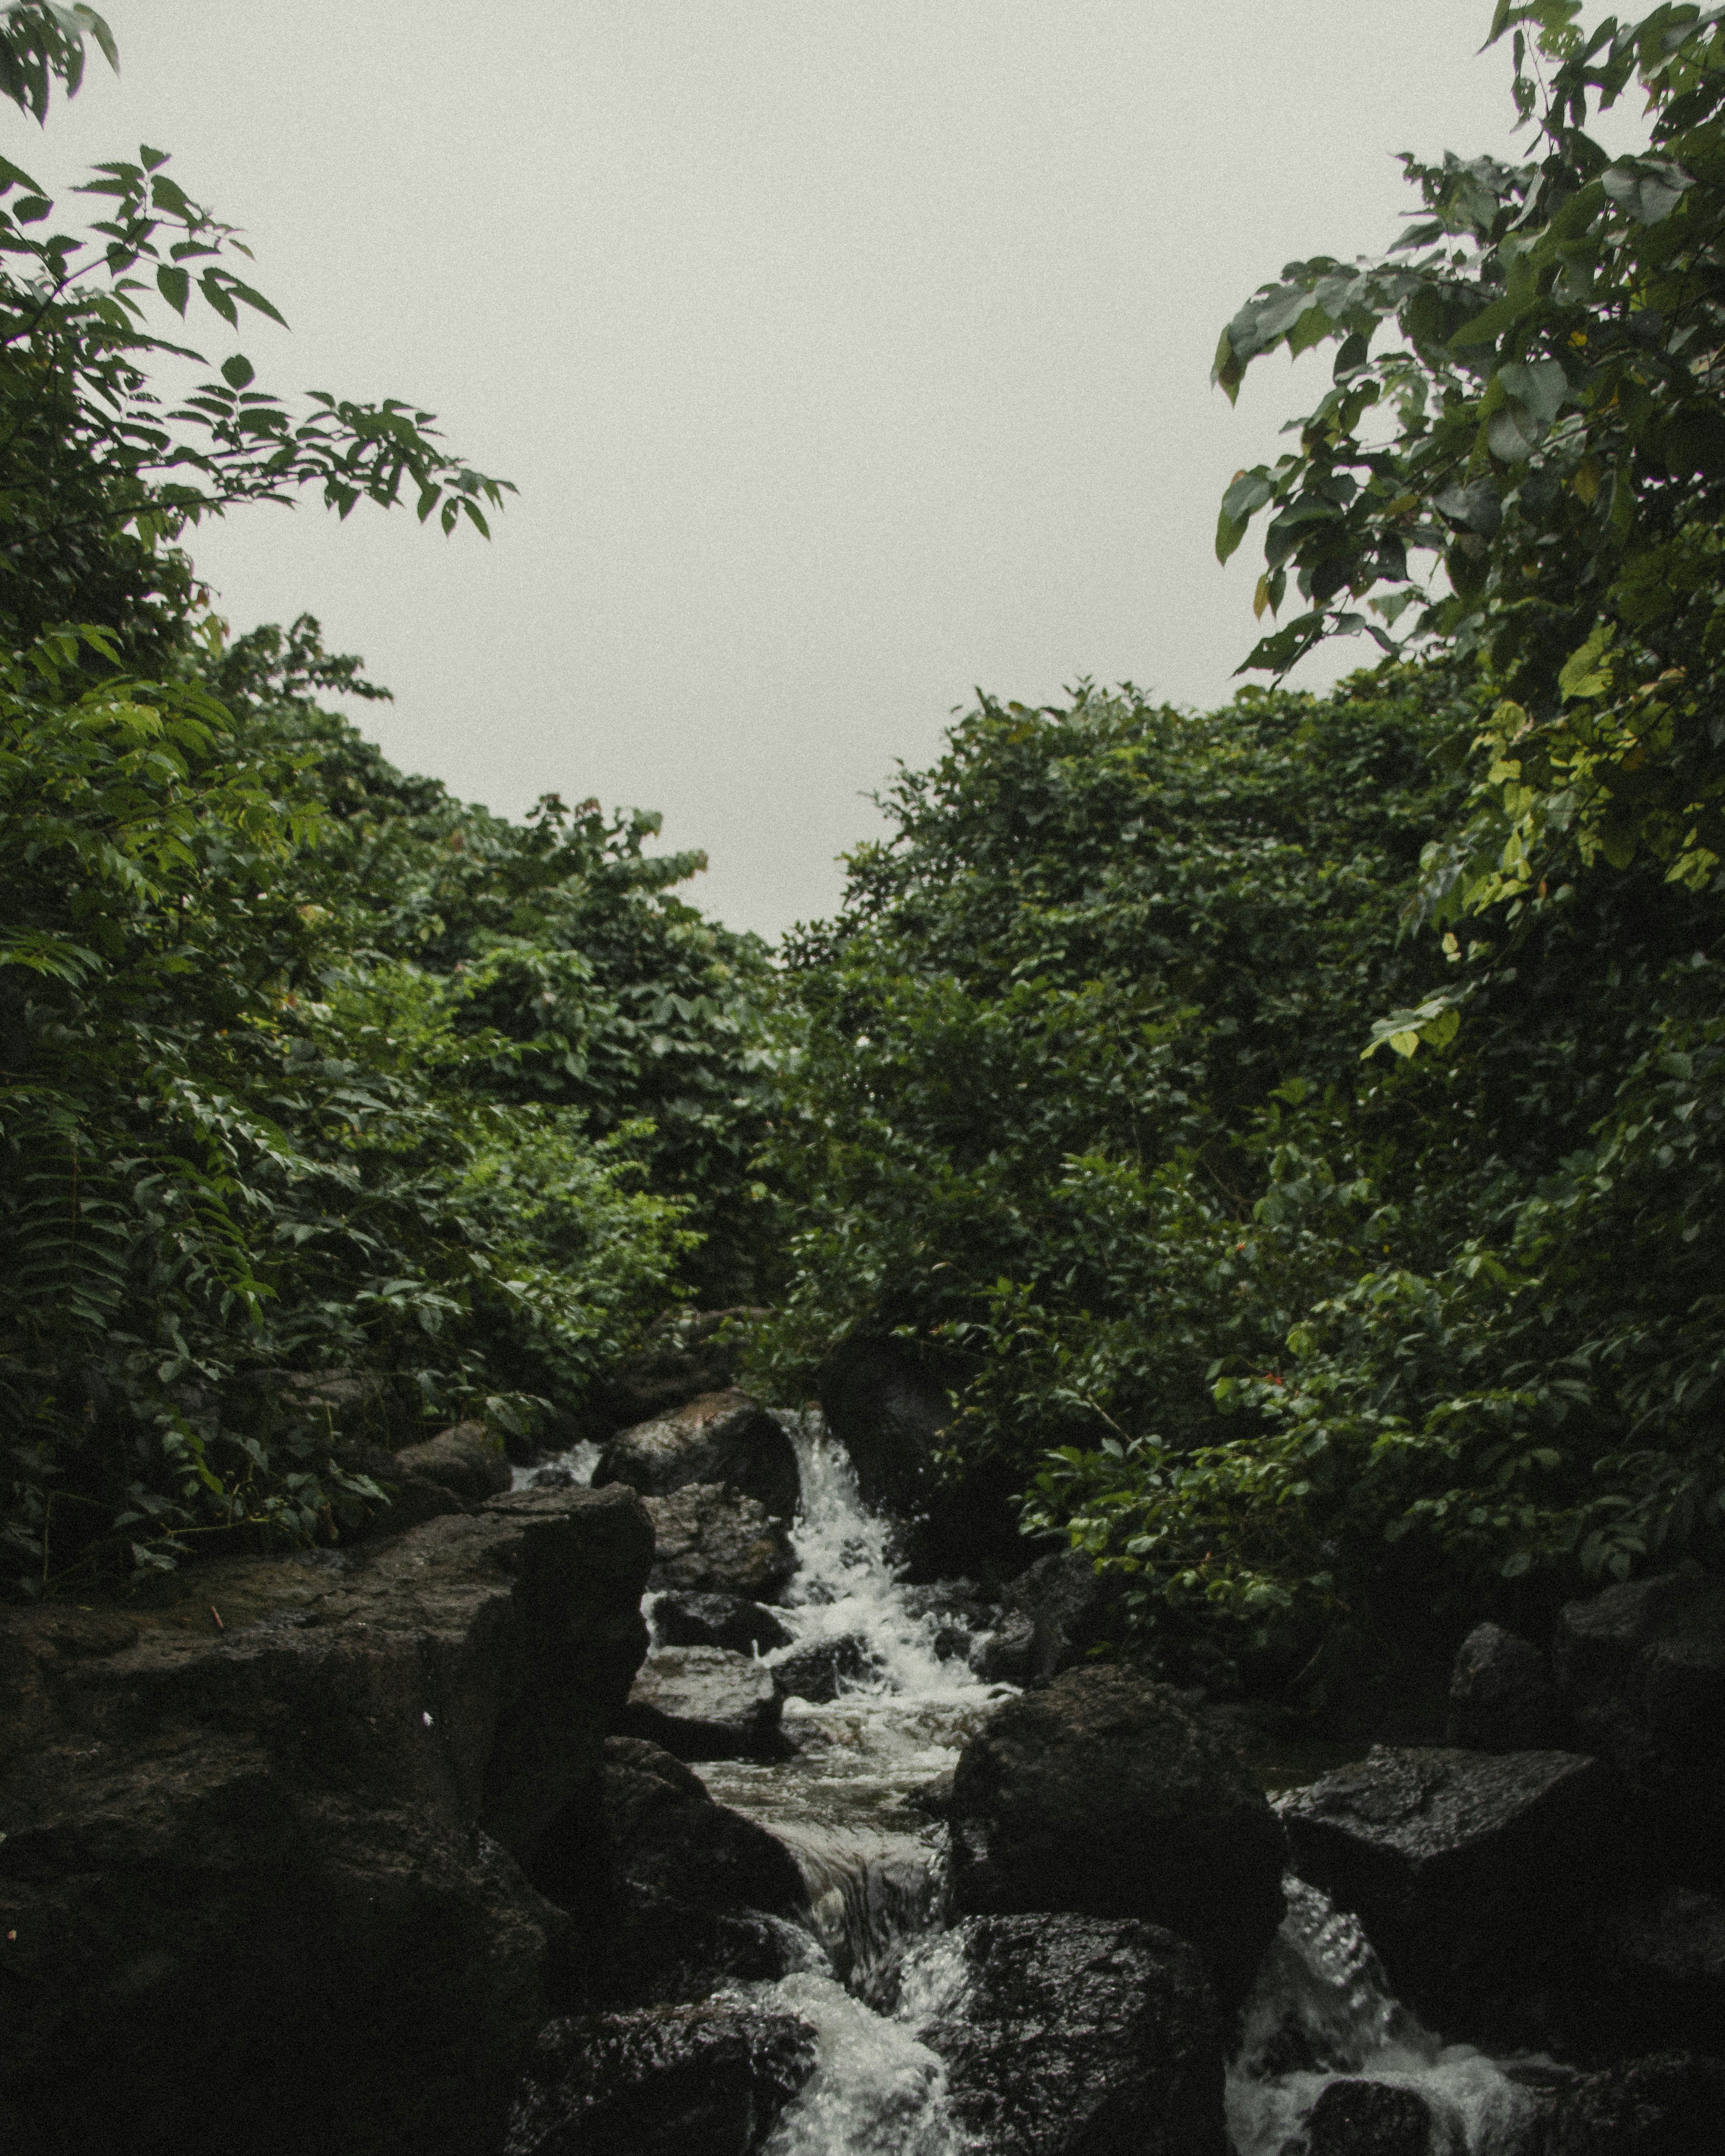 water falls between green trees